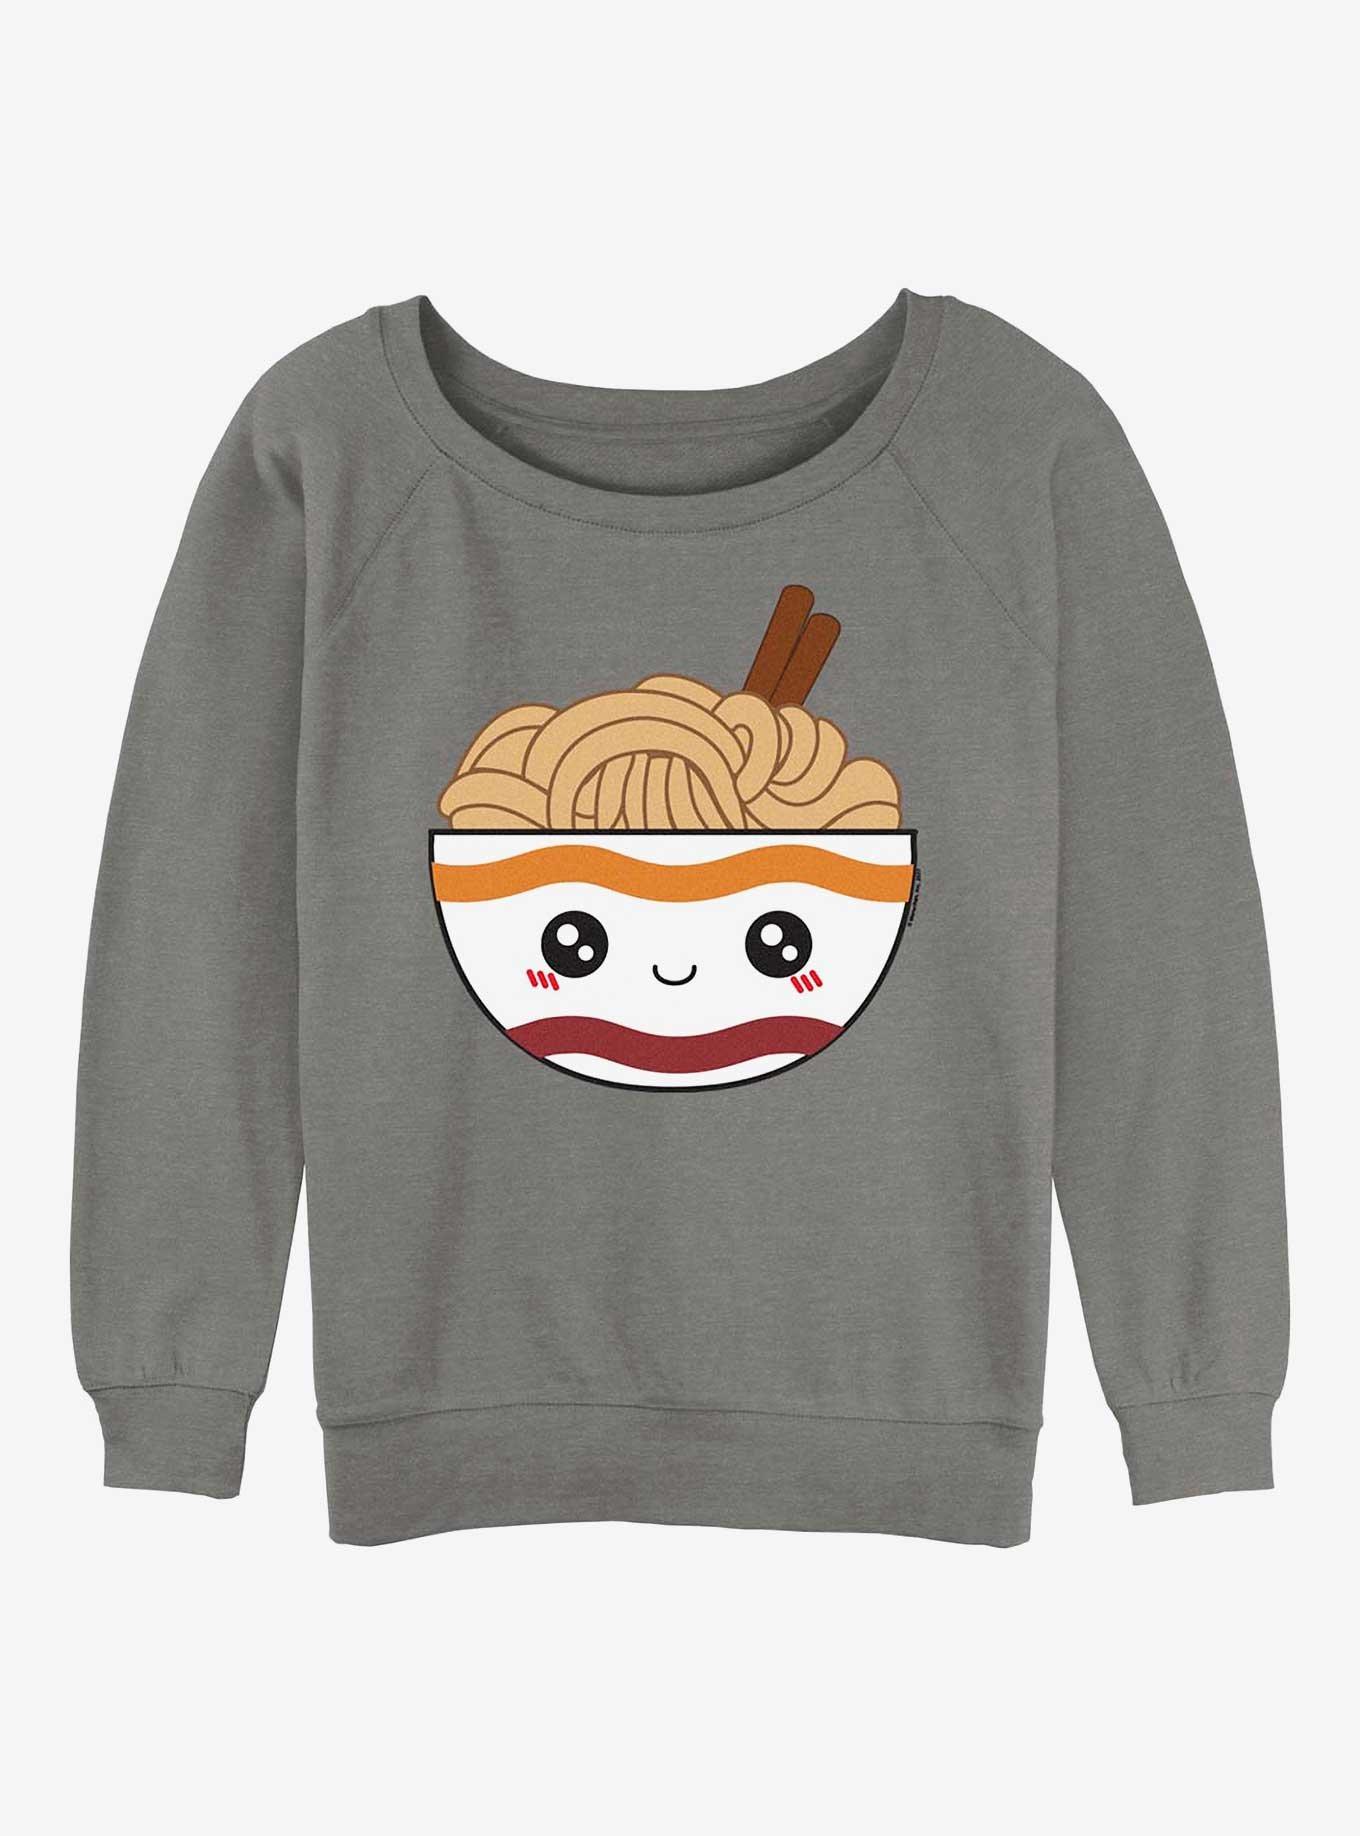 Maruchan Noodle Bowl Girls Slouchy Sweatshirt, GRAY HTR, hi-res